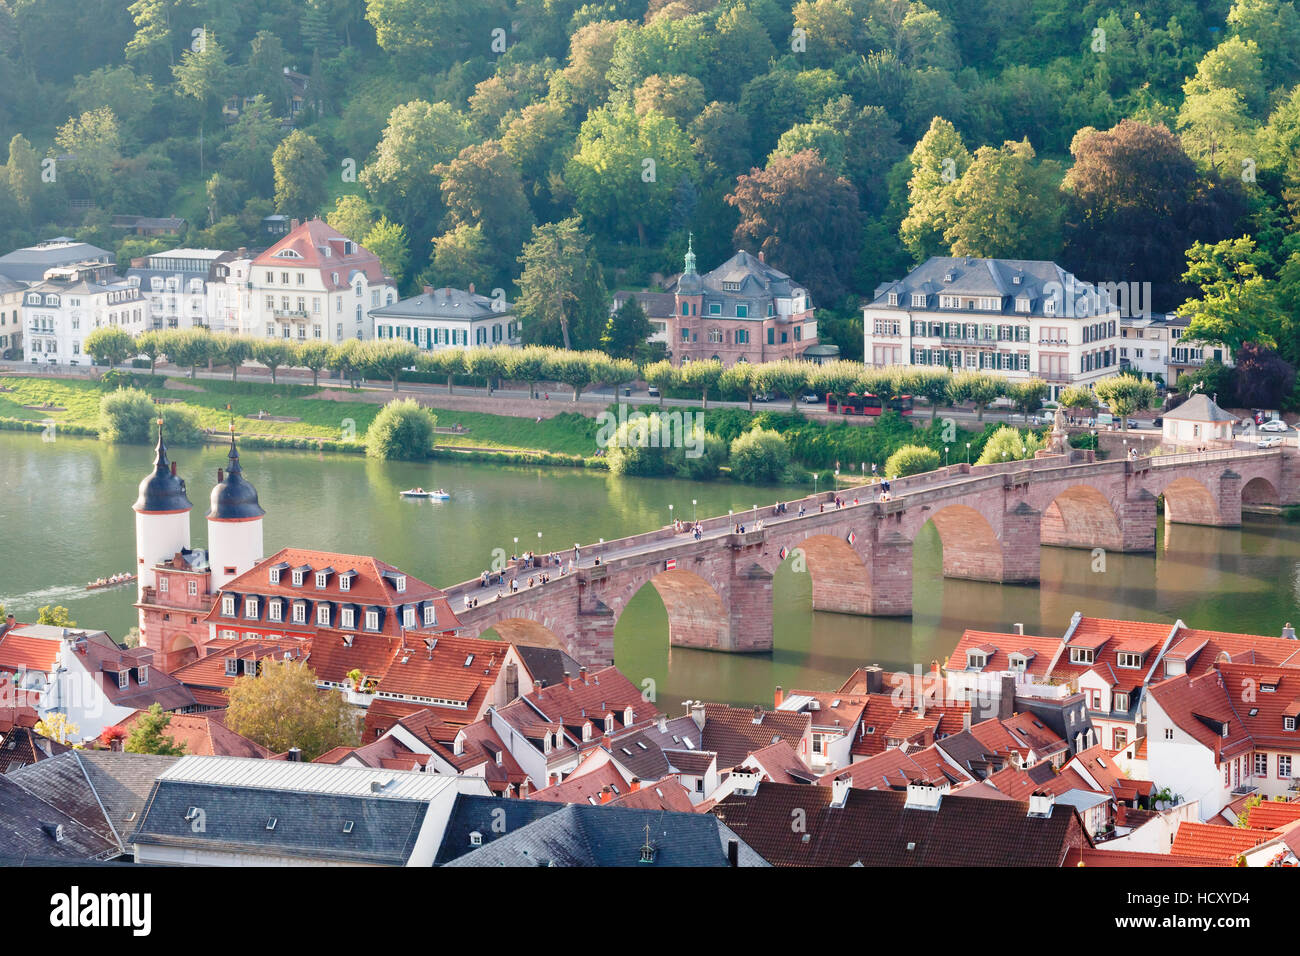 Old town with Karl-Theodor Bridge (Old Bridge) and gate, Neckar River, Heidelberg, Baden-Wurttemberg, Germany Stock Photo